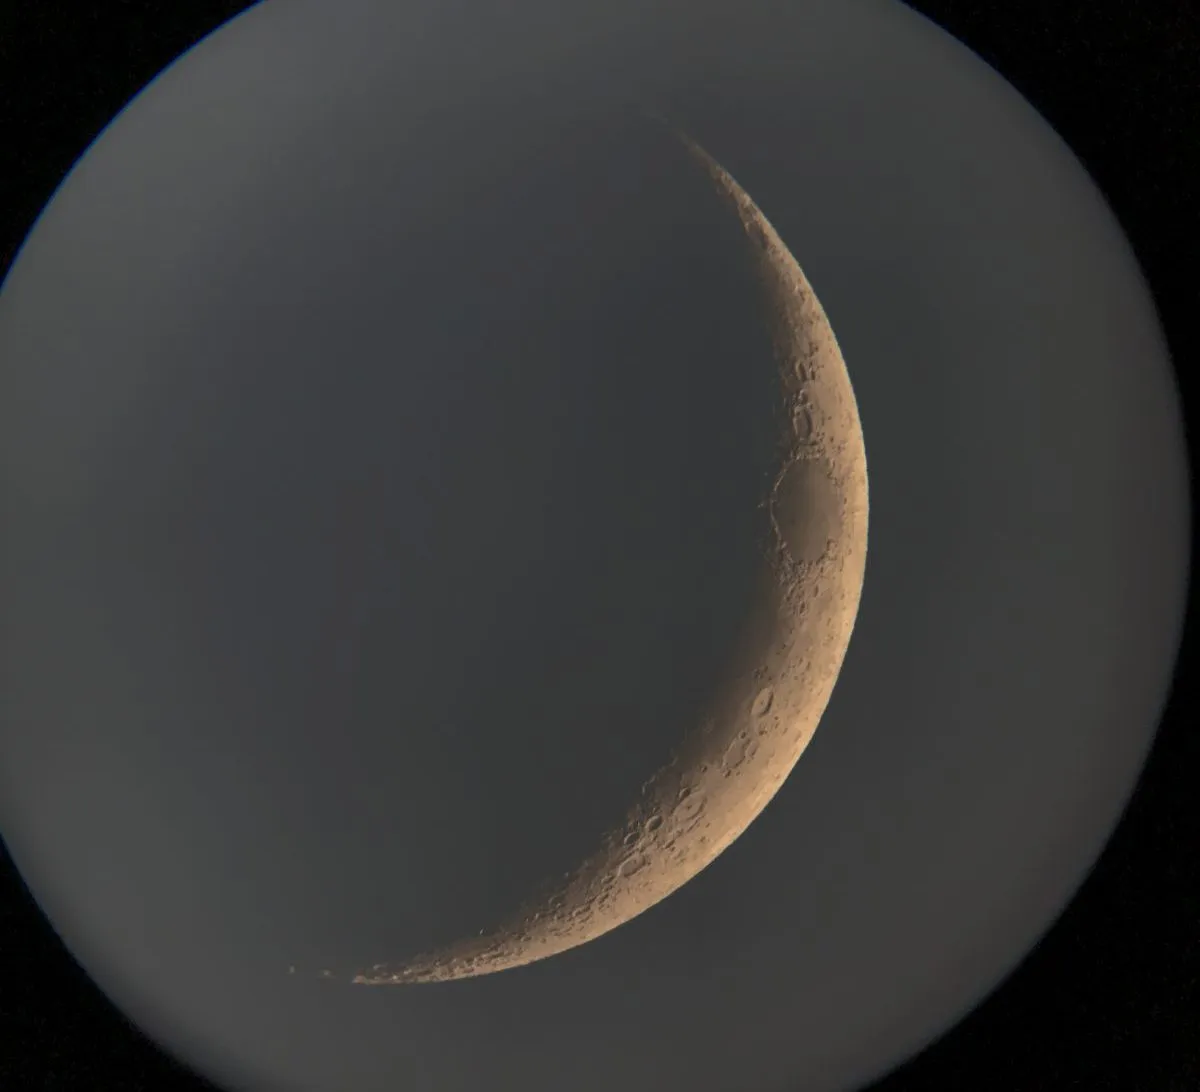 A crescent Moon captured with the NightCap smartphone app. Credit: Paul Money